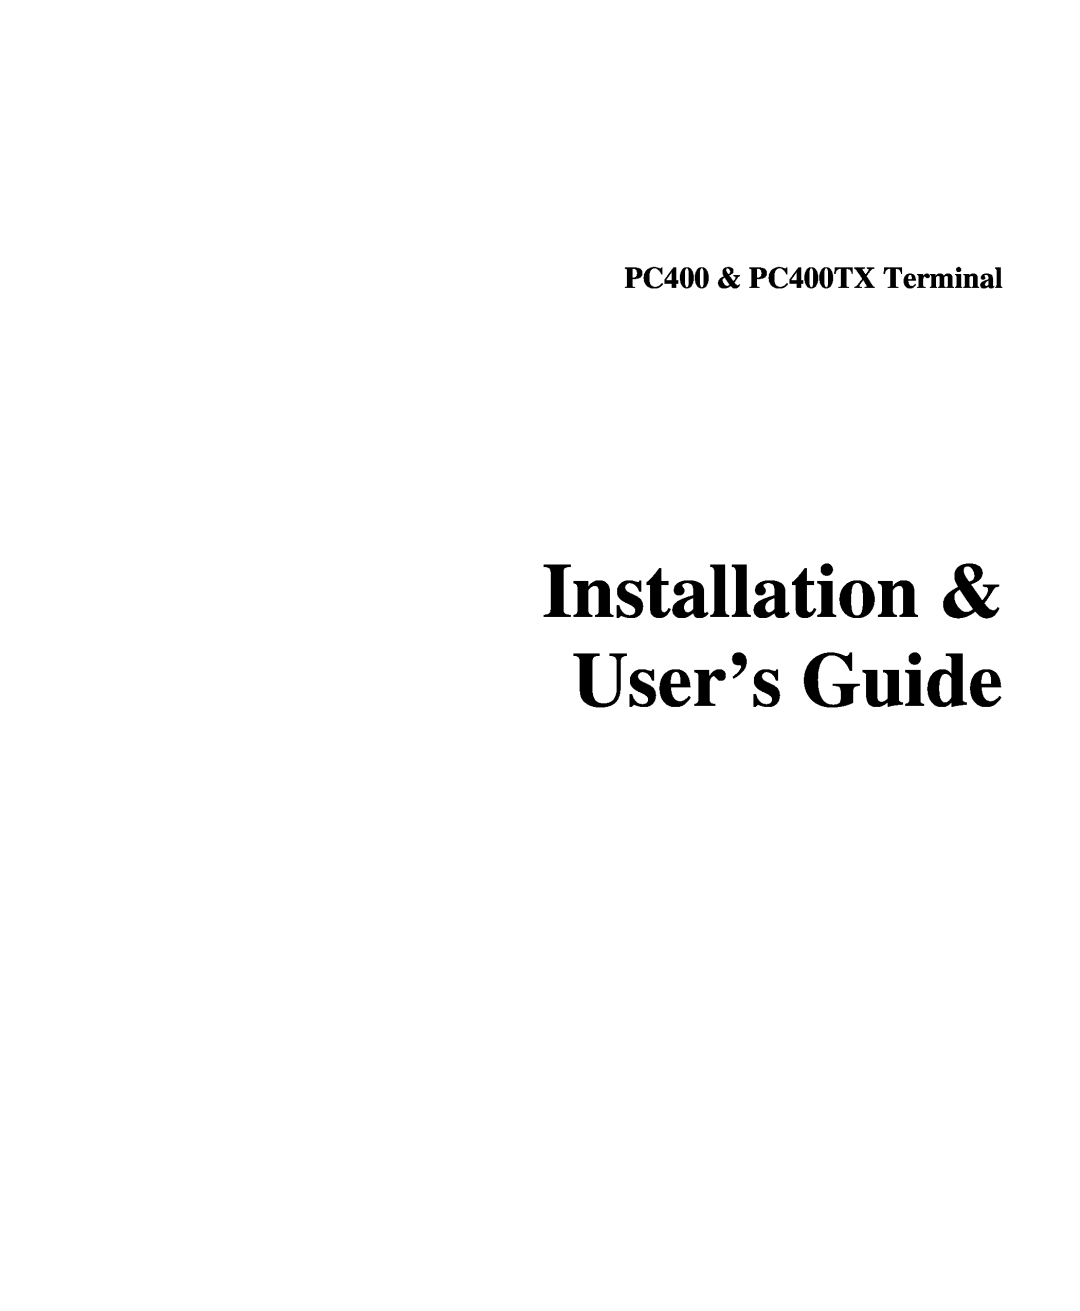 Lathem manual PC400 & PC400TX Terminal, Installation & User’s Guide 